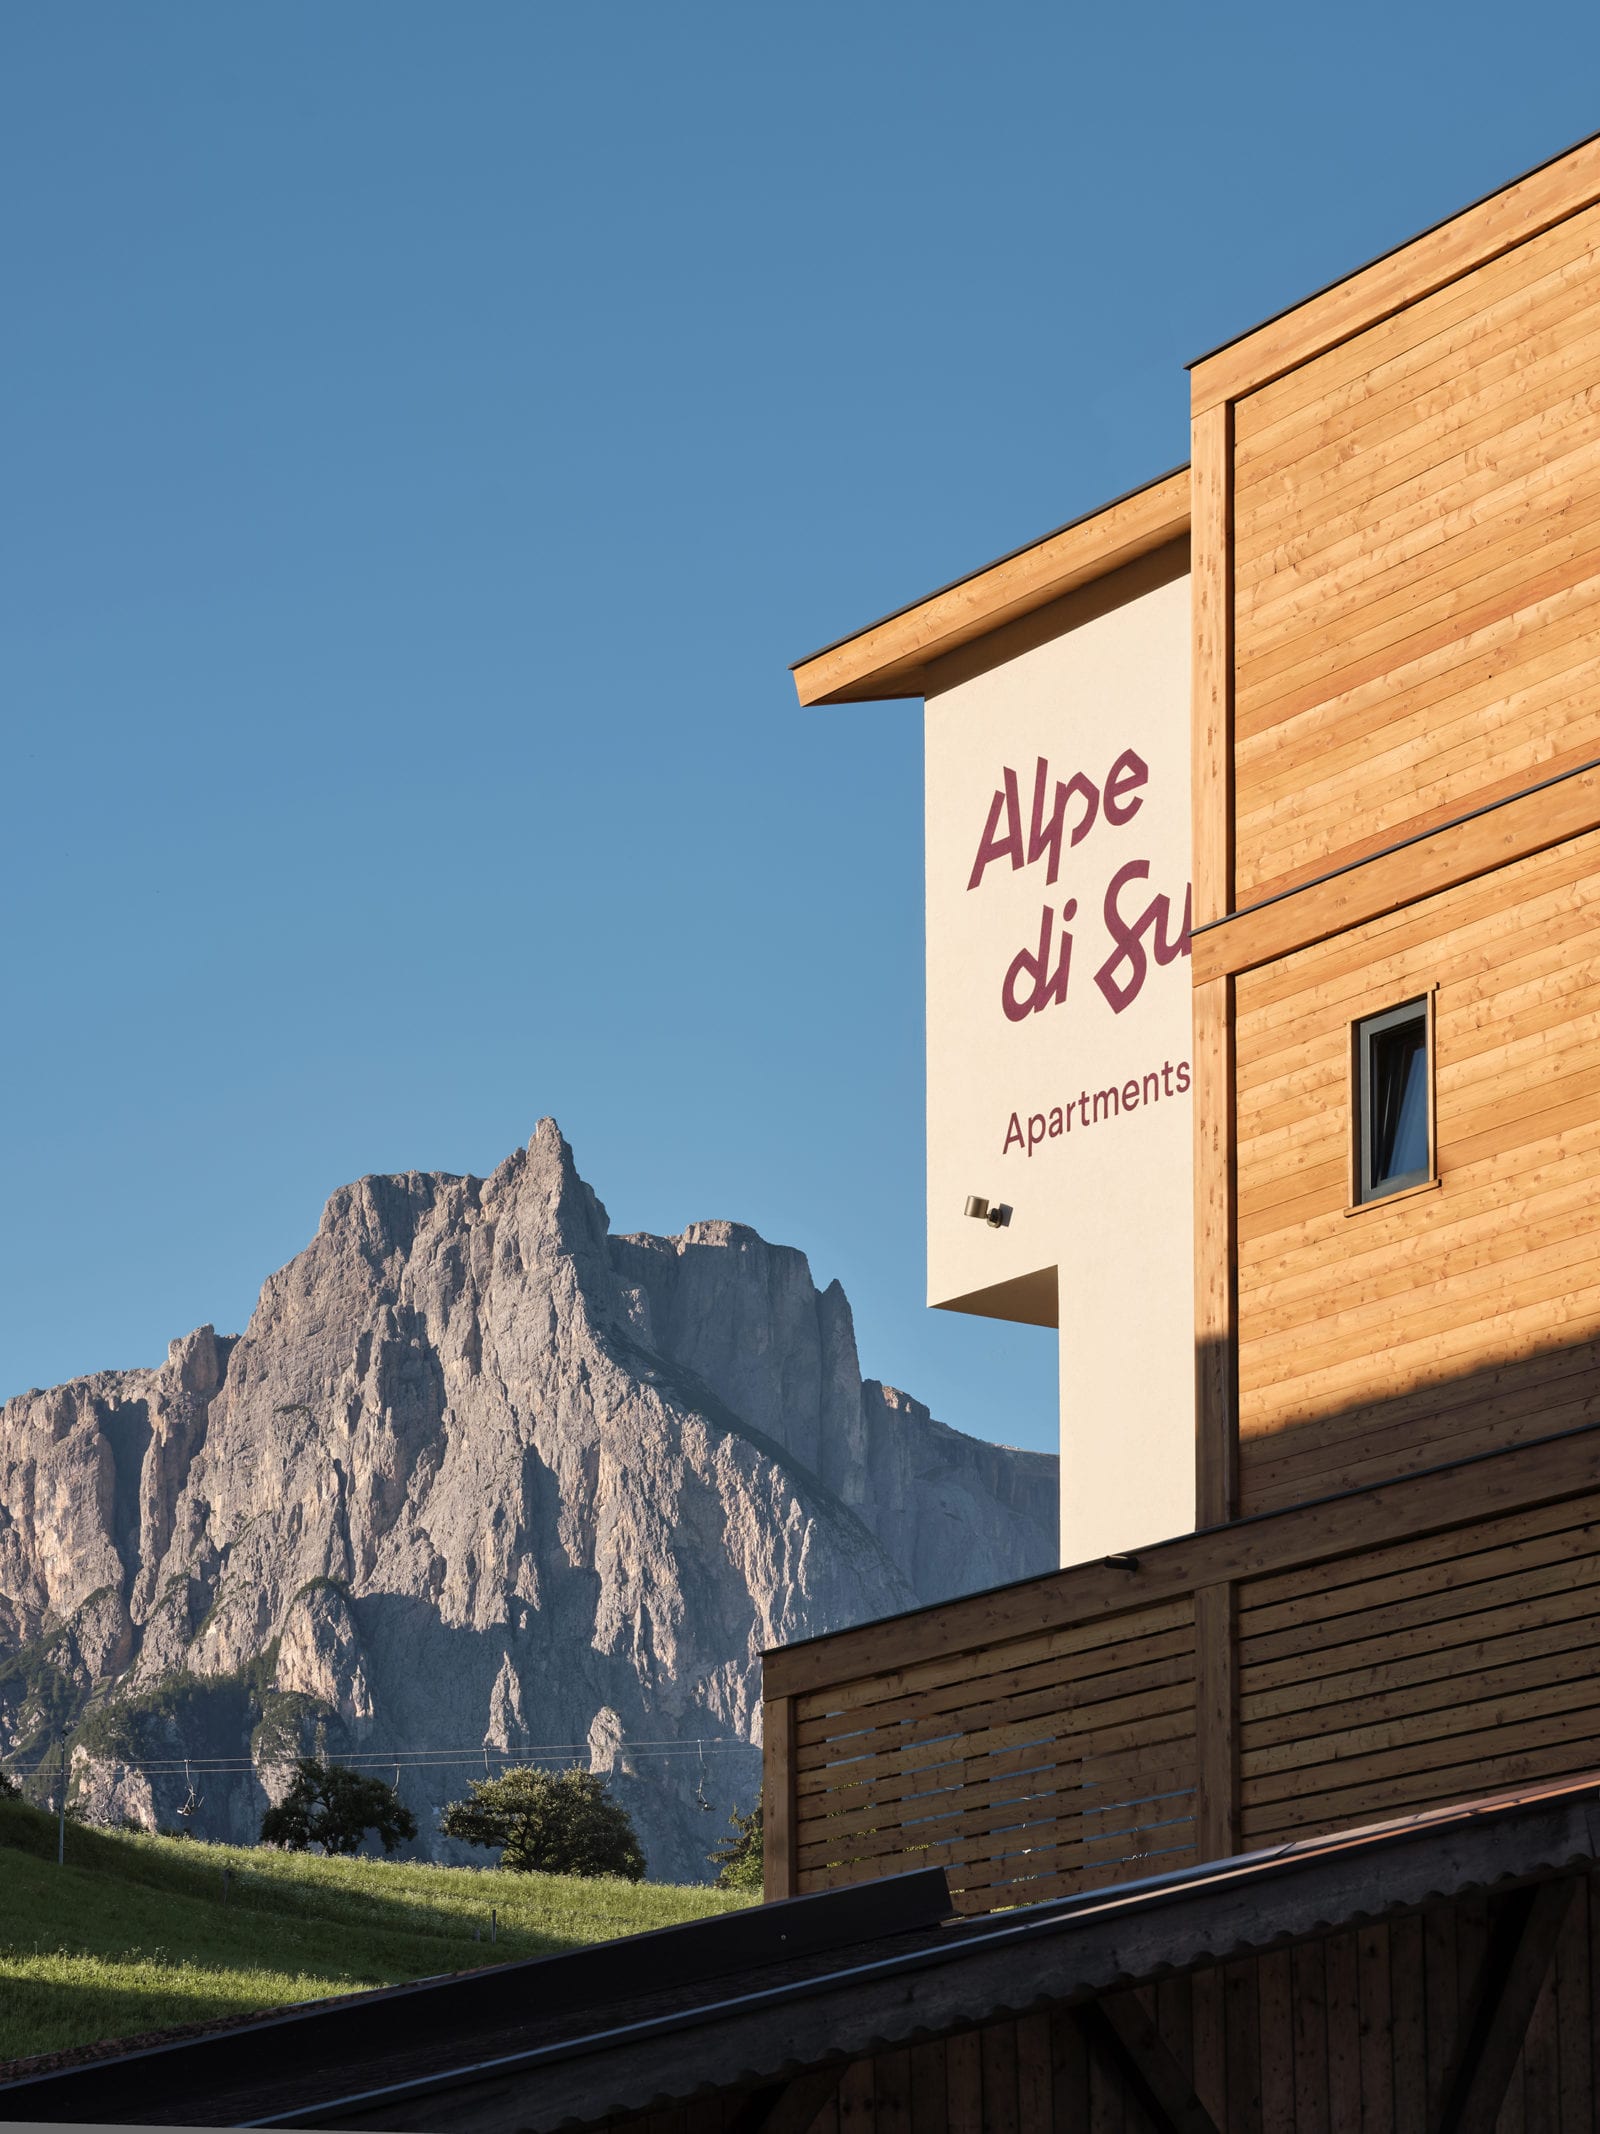 Alpe di Susi